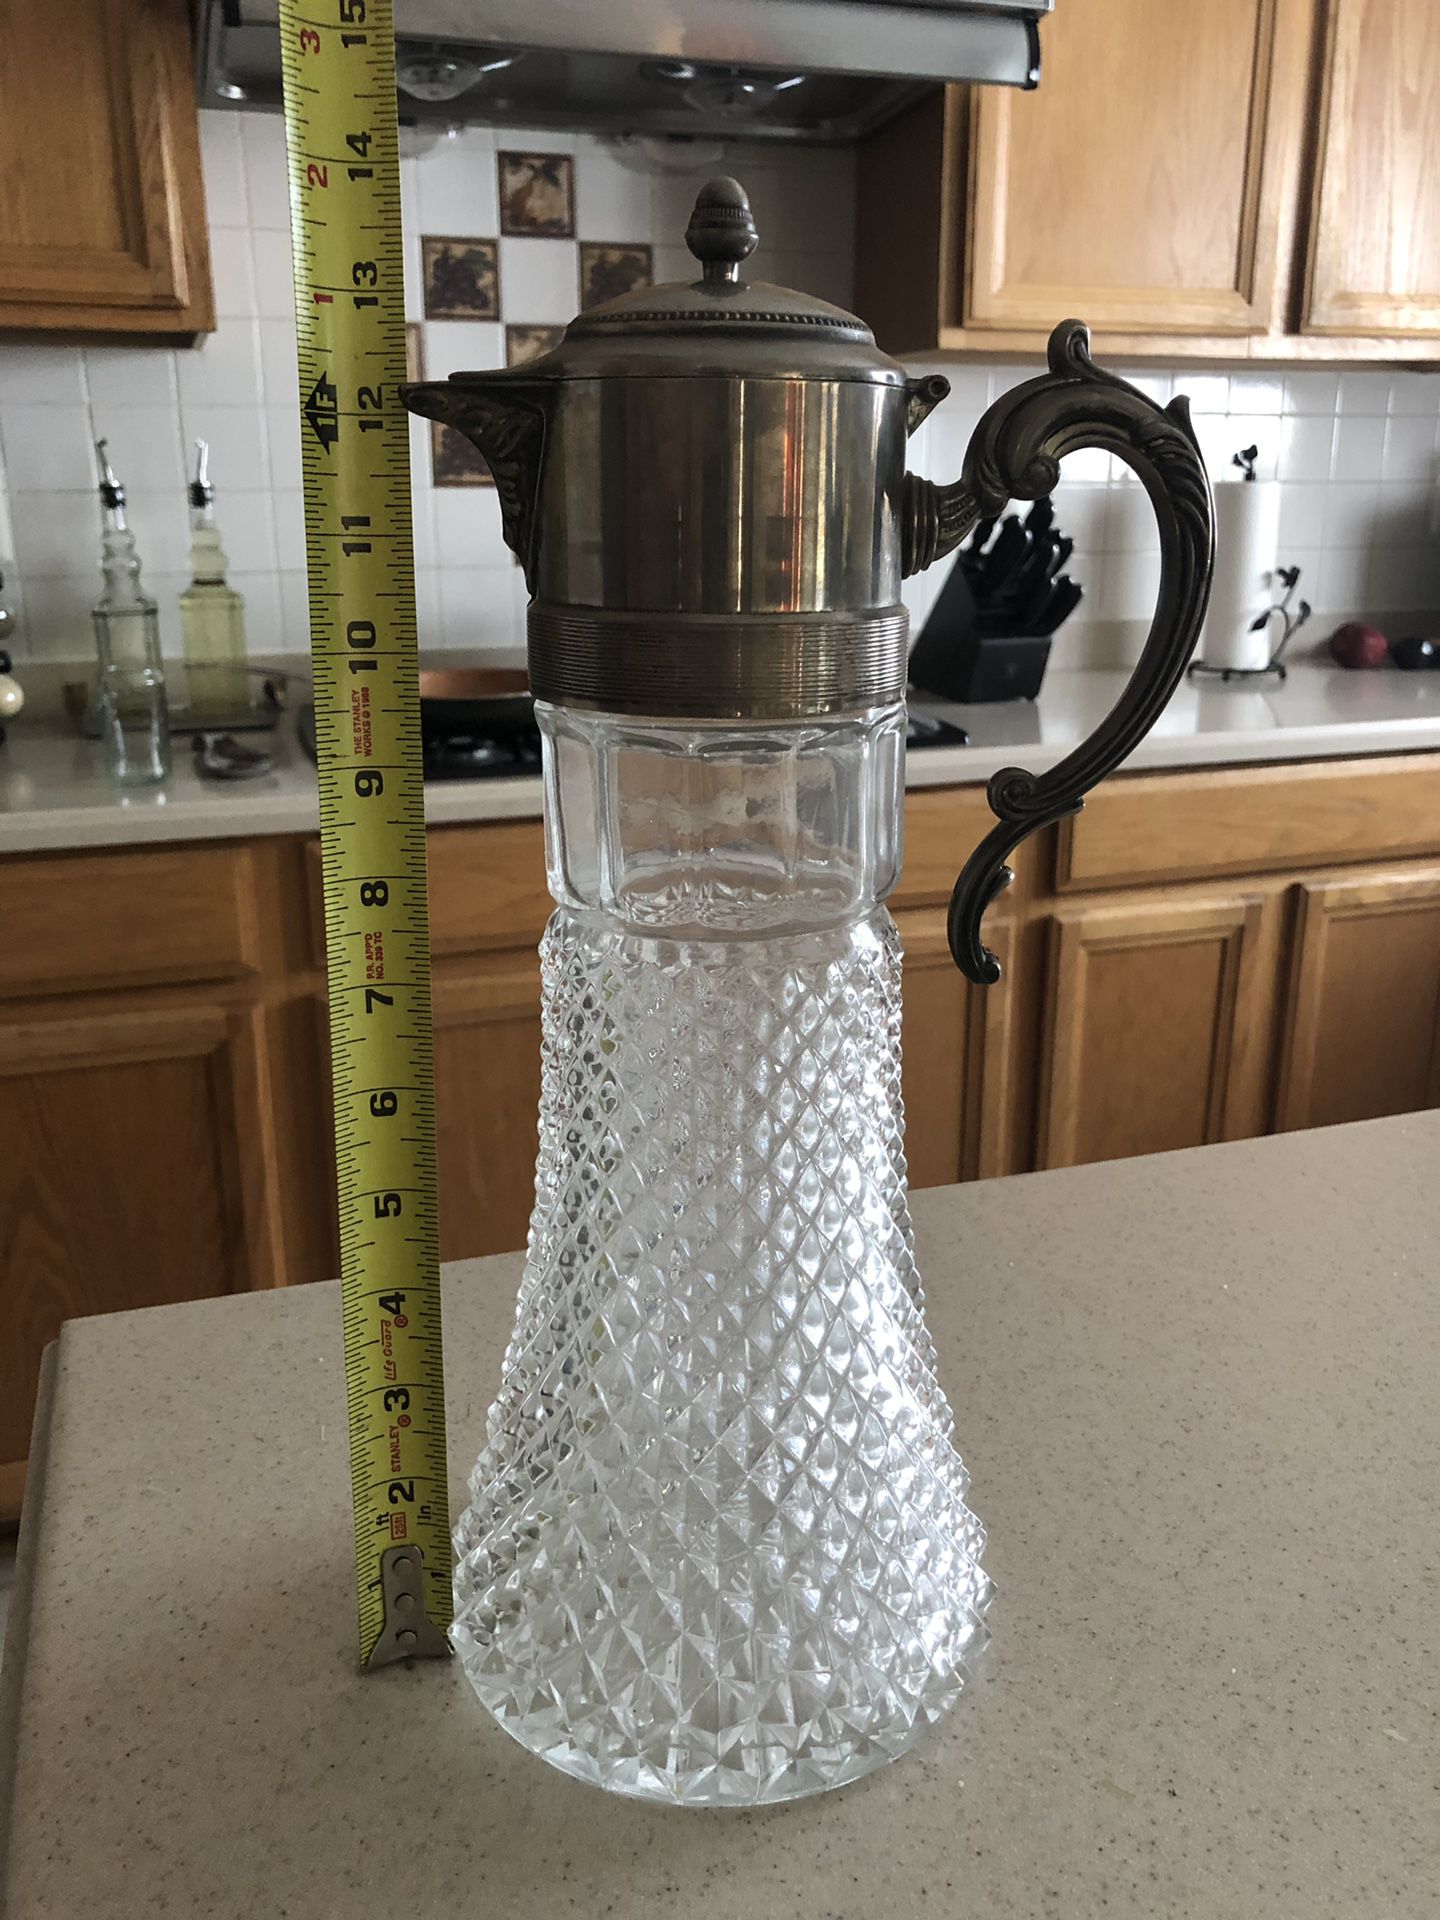 Glass pitcher, kitchen